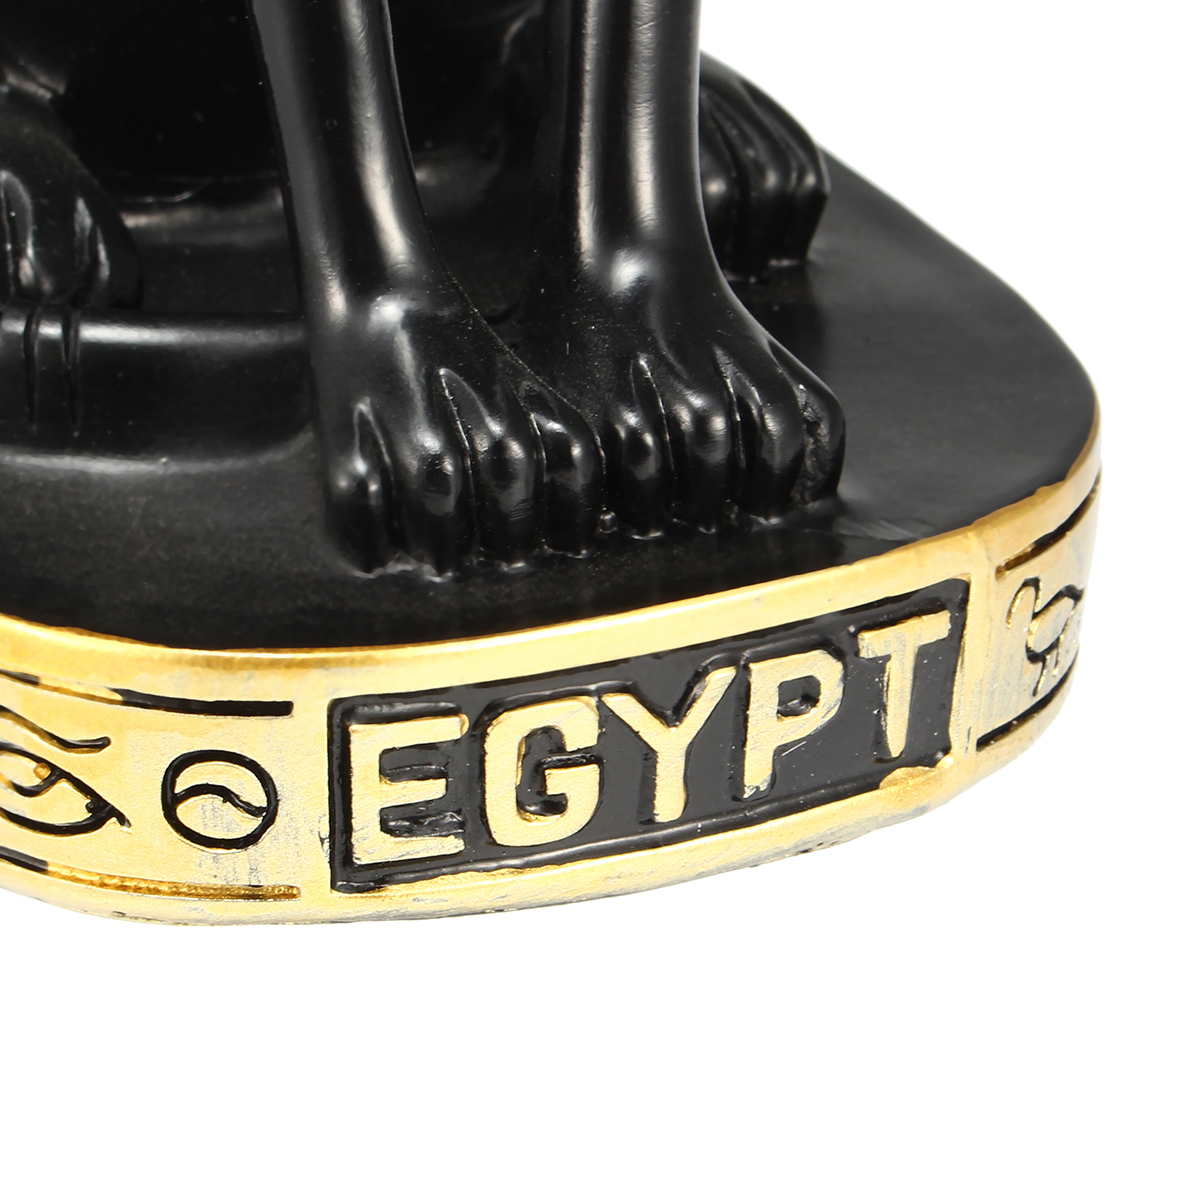 15-Vintage-Egyptian-Bastet-Cat-Goddess-Resin-Figurine-Black-Cat-Pharaoh-Statue-Decorations-1376089